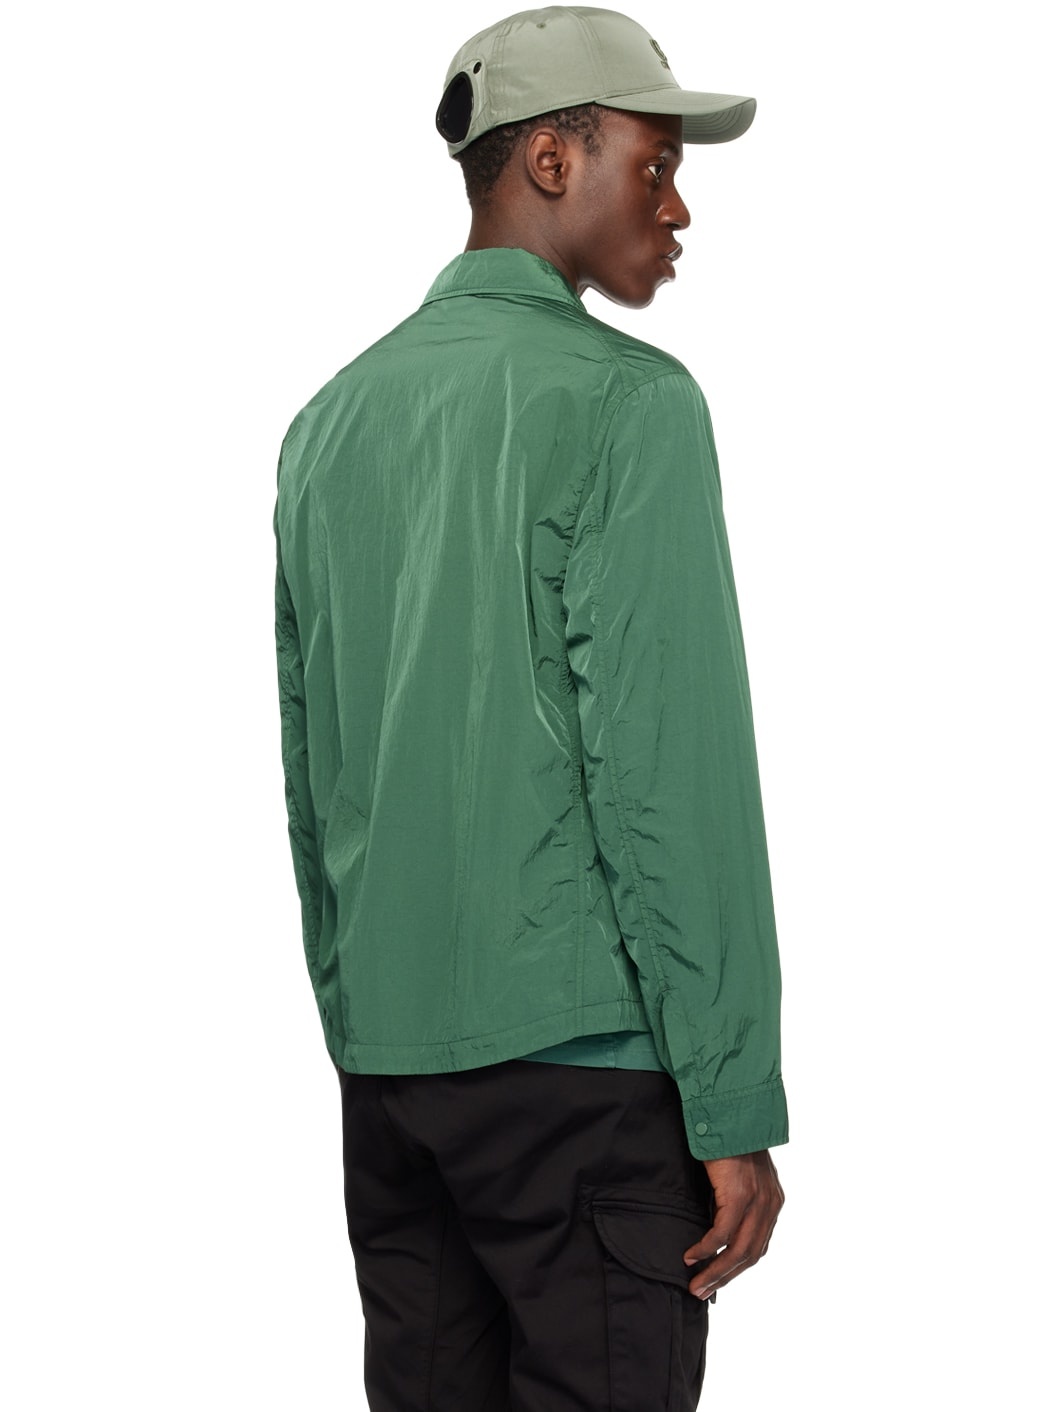 Green Pocket Jacket - 3